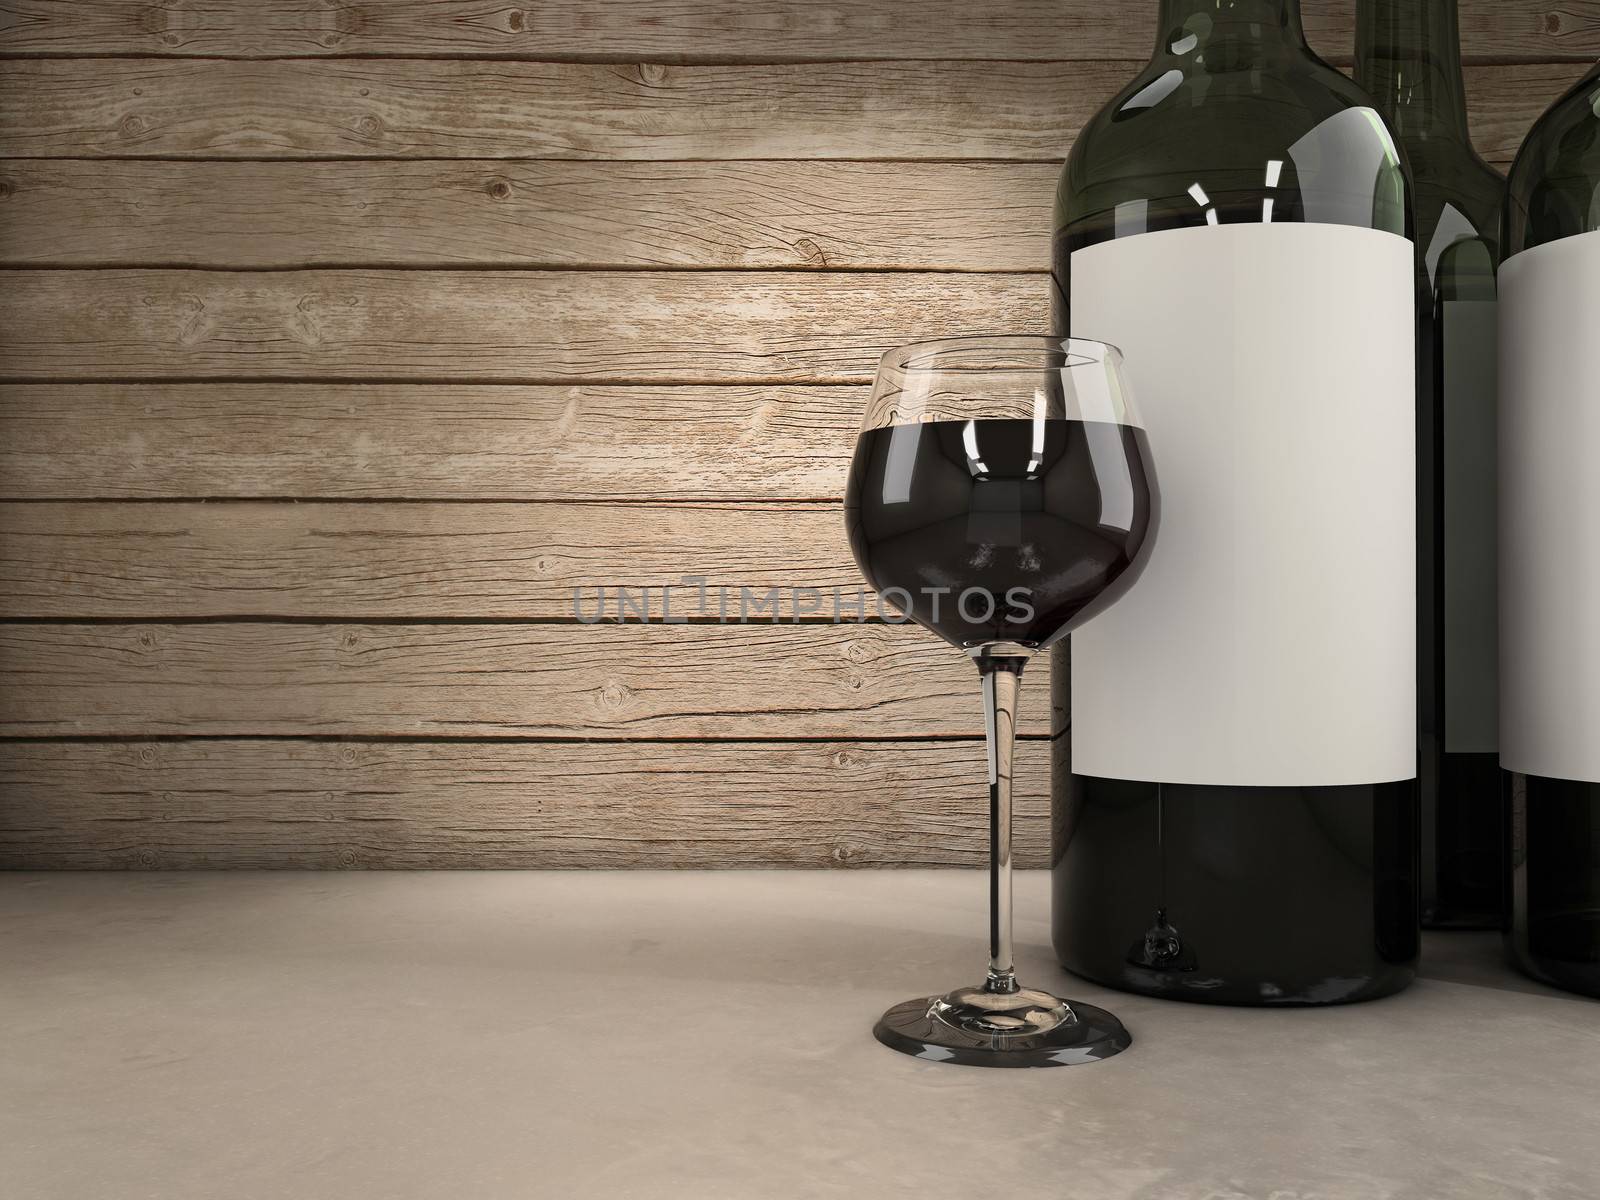 Wine background by dynamicfoto